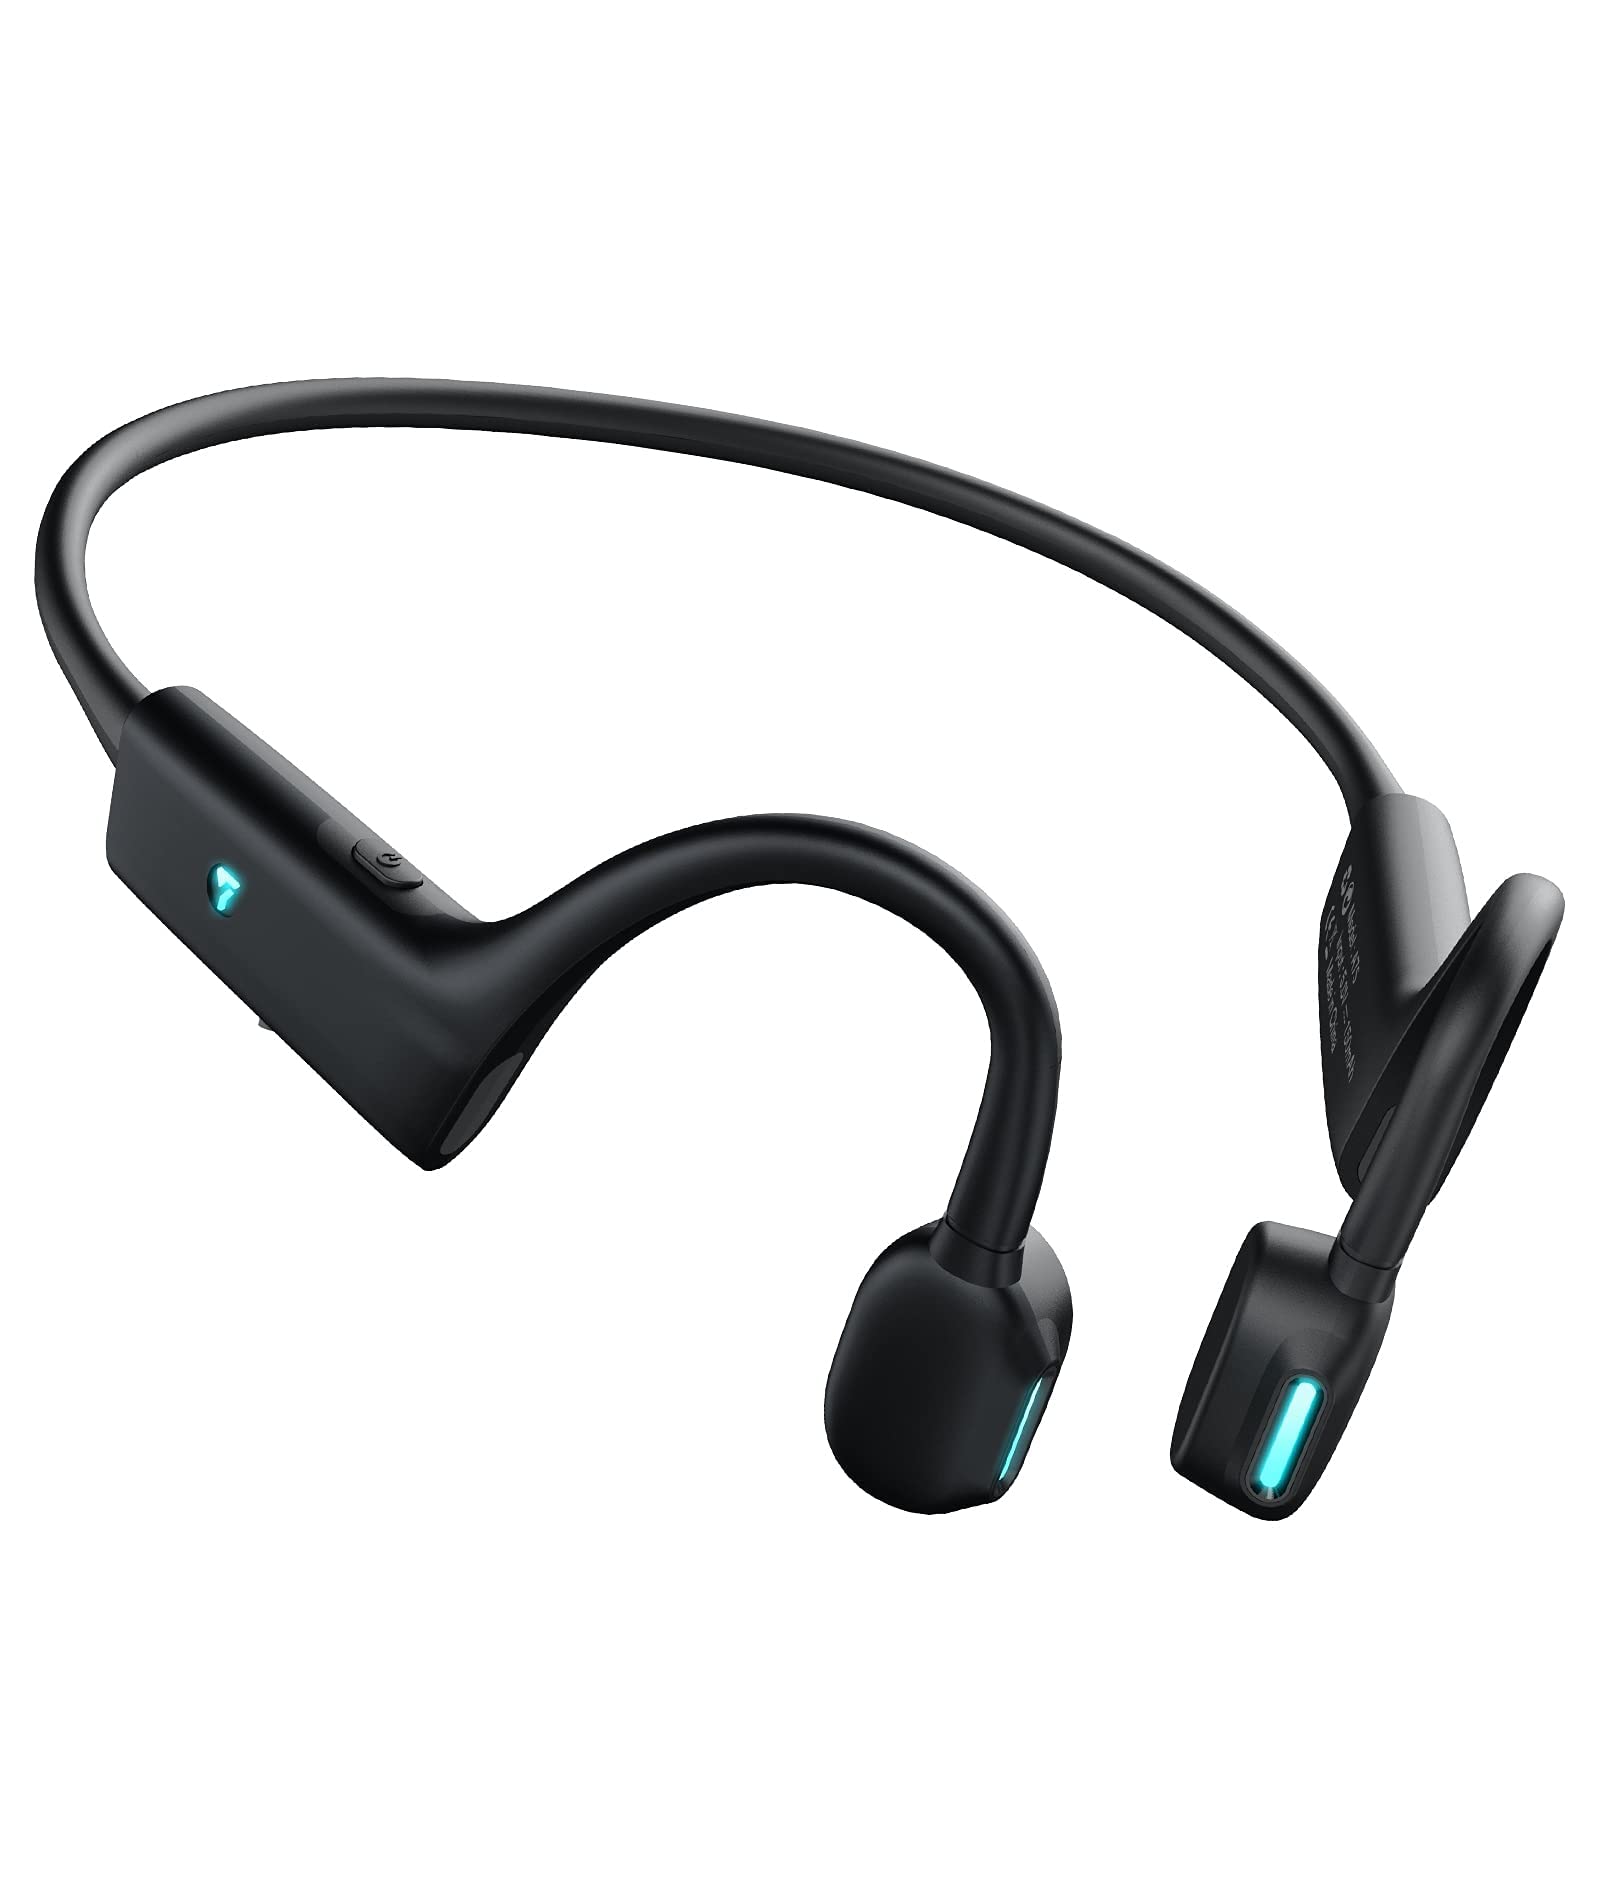 Open Ear Headphones, Sanag Over Ear Wireless Bluetooth Headphones, Portable Wireless Sports Headphones, IP67 Sweatproof Music Call-answering for Ki...